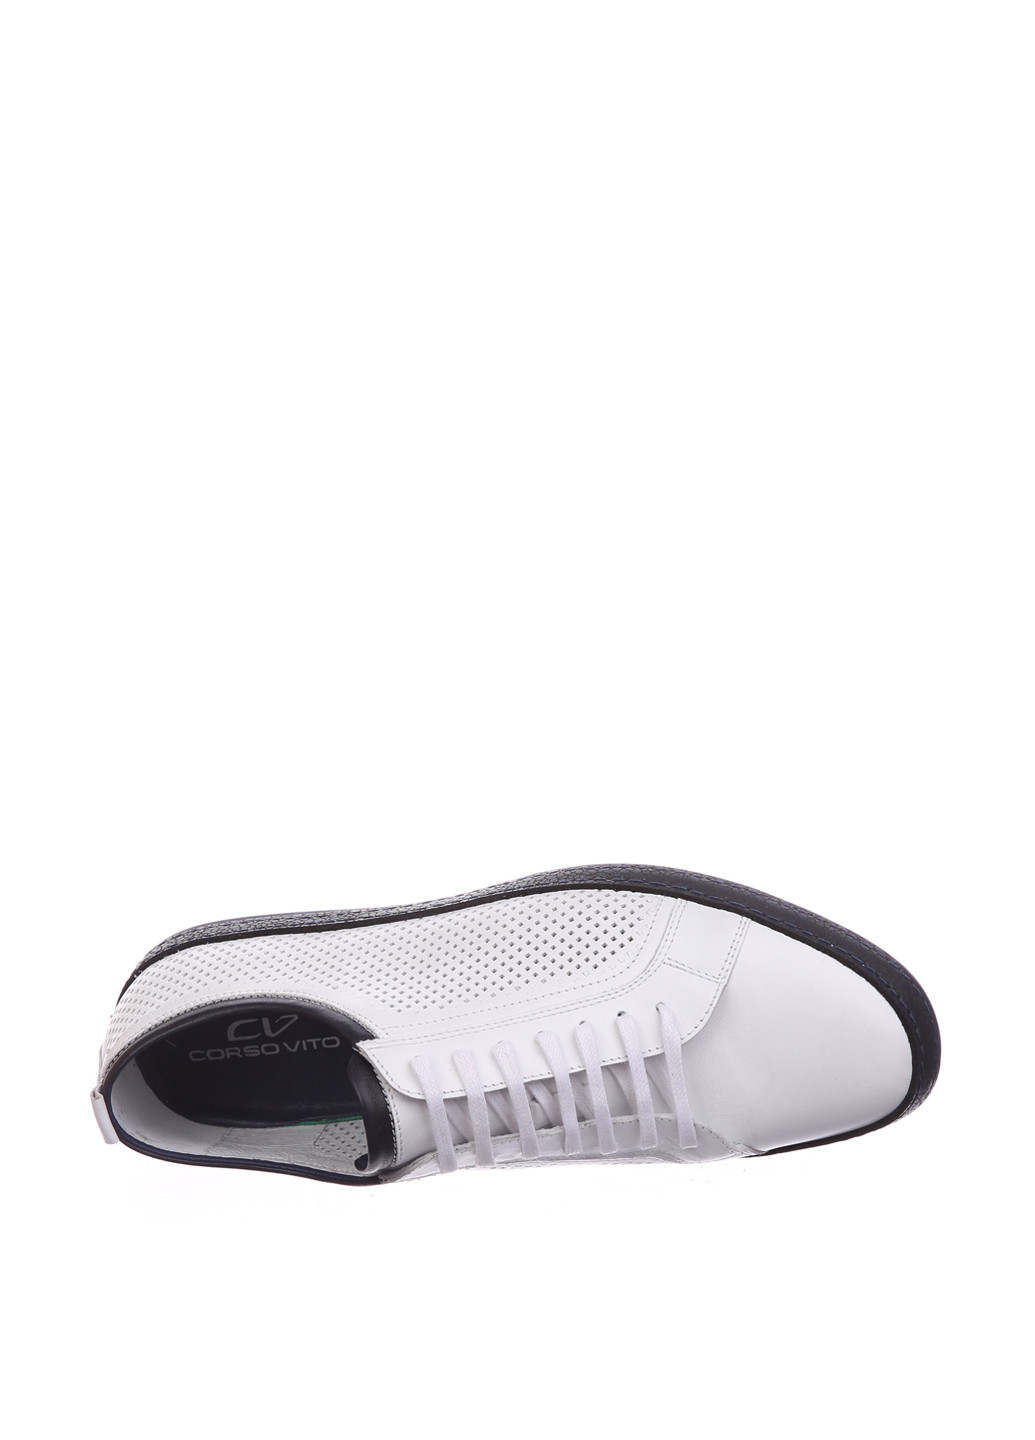 Белые спортивные туфли Corso Vito на шнурках